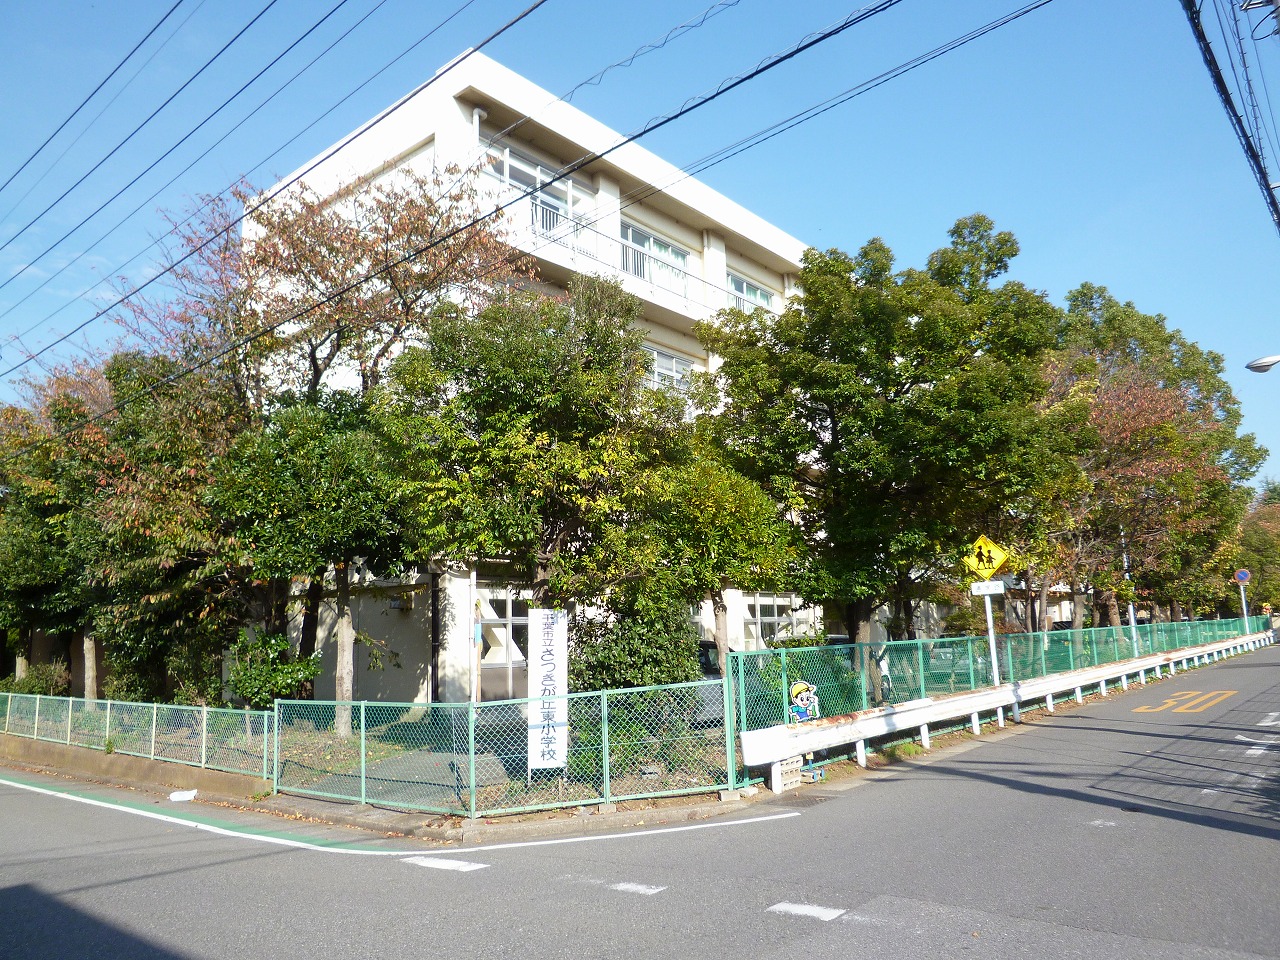 Primary school. 142m until the Chiba Municipal Satsukigaoka Higashi elementary school (elementary school)